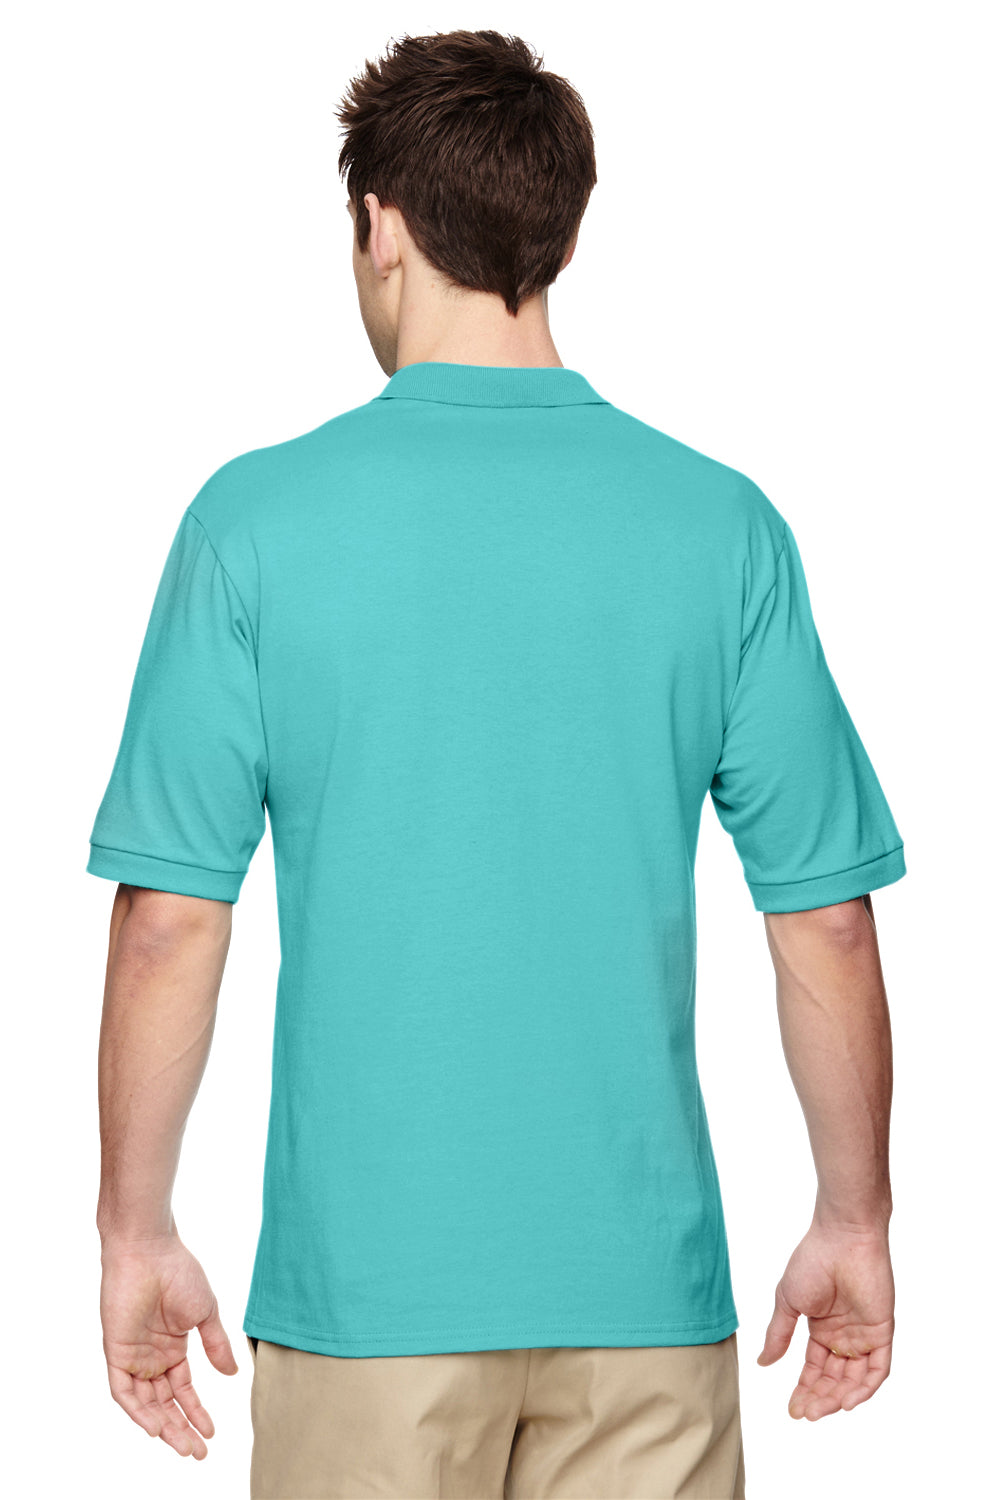 Jerzees 437 Mens SpotShield Stain Resistant Short Sleeve Polo Shirt Scuba Blue Back